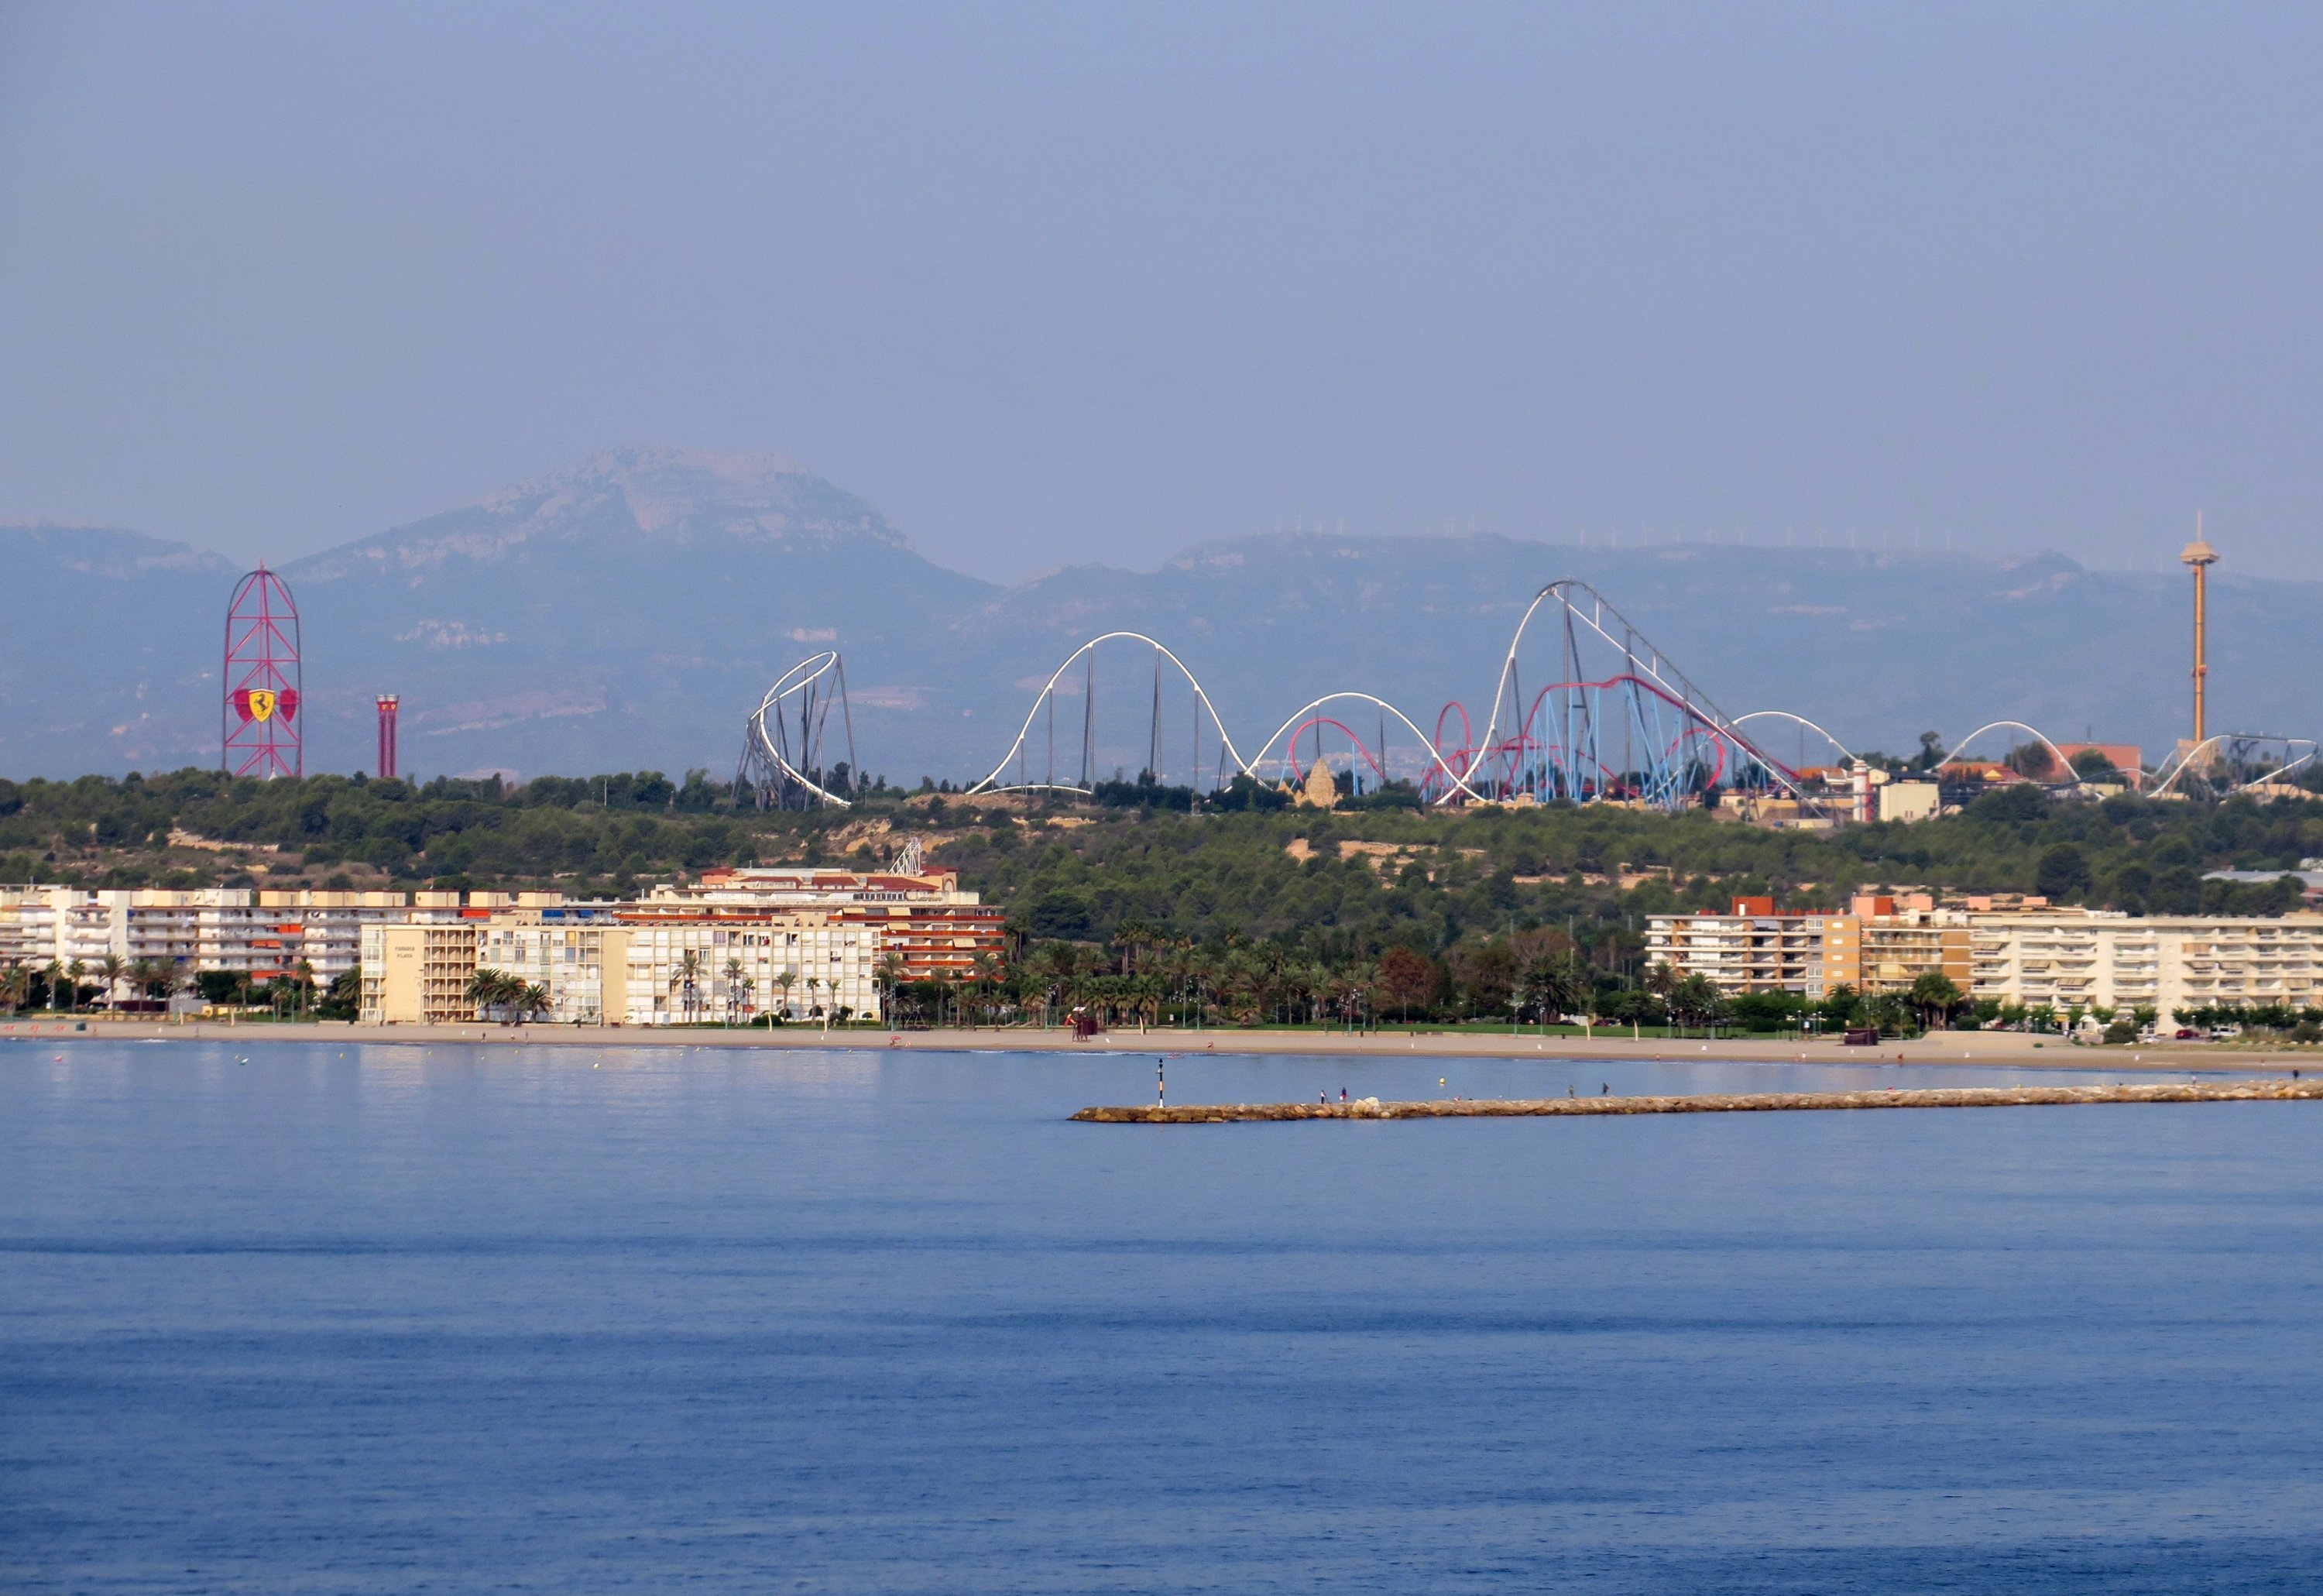   Taman hiburan Port Aventura dan Ferrari Land di Costa Dorada adalah salah satu daya tarik utama.  (foto dpa) 